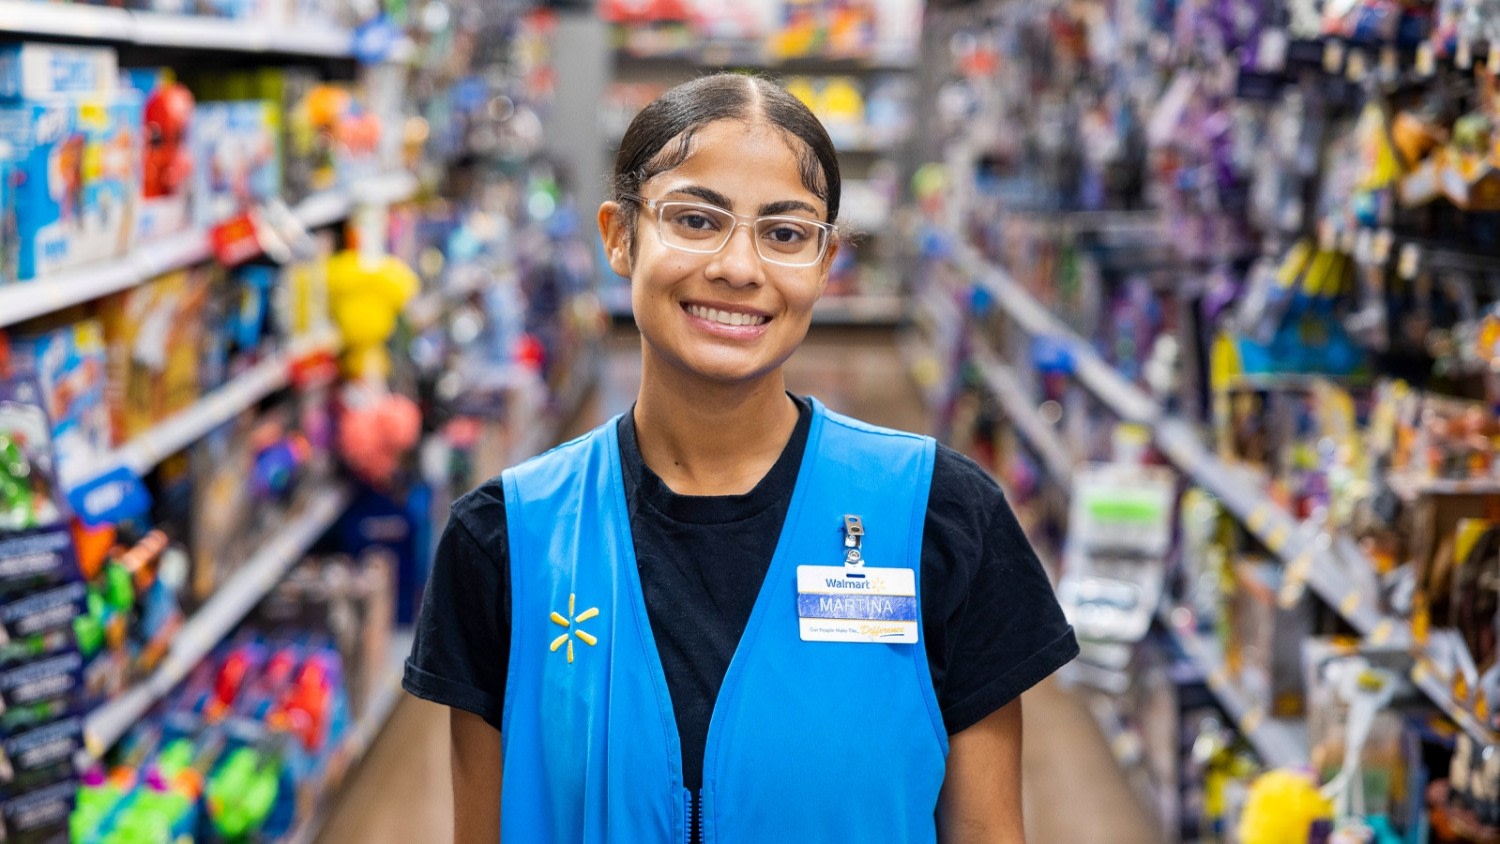 Walmart & Communities: Building a Net-Zero Future 